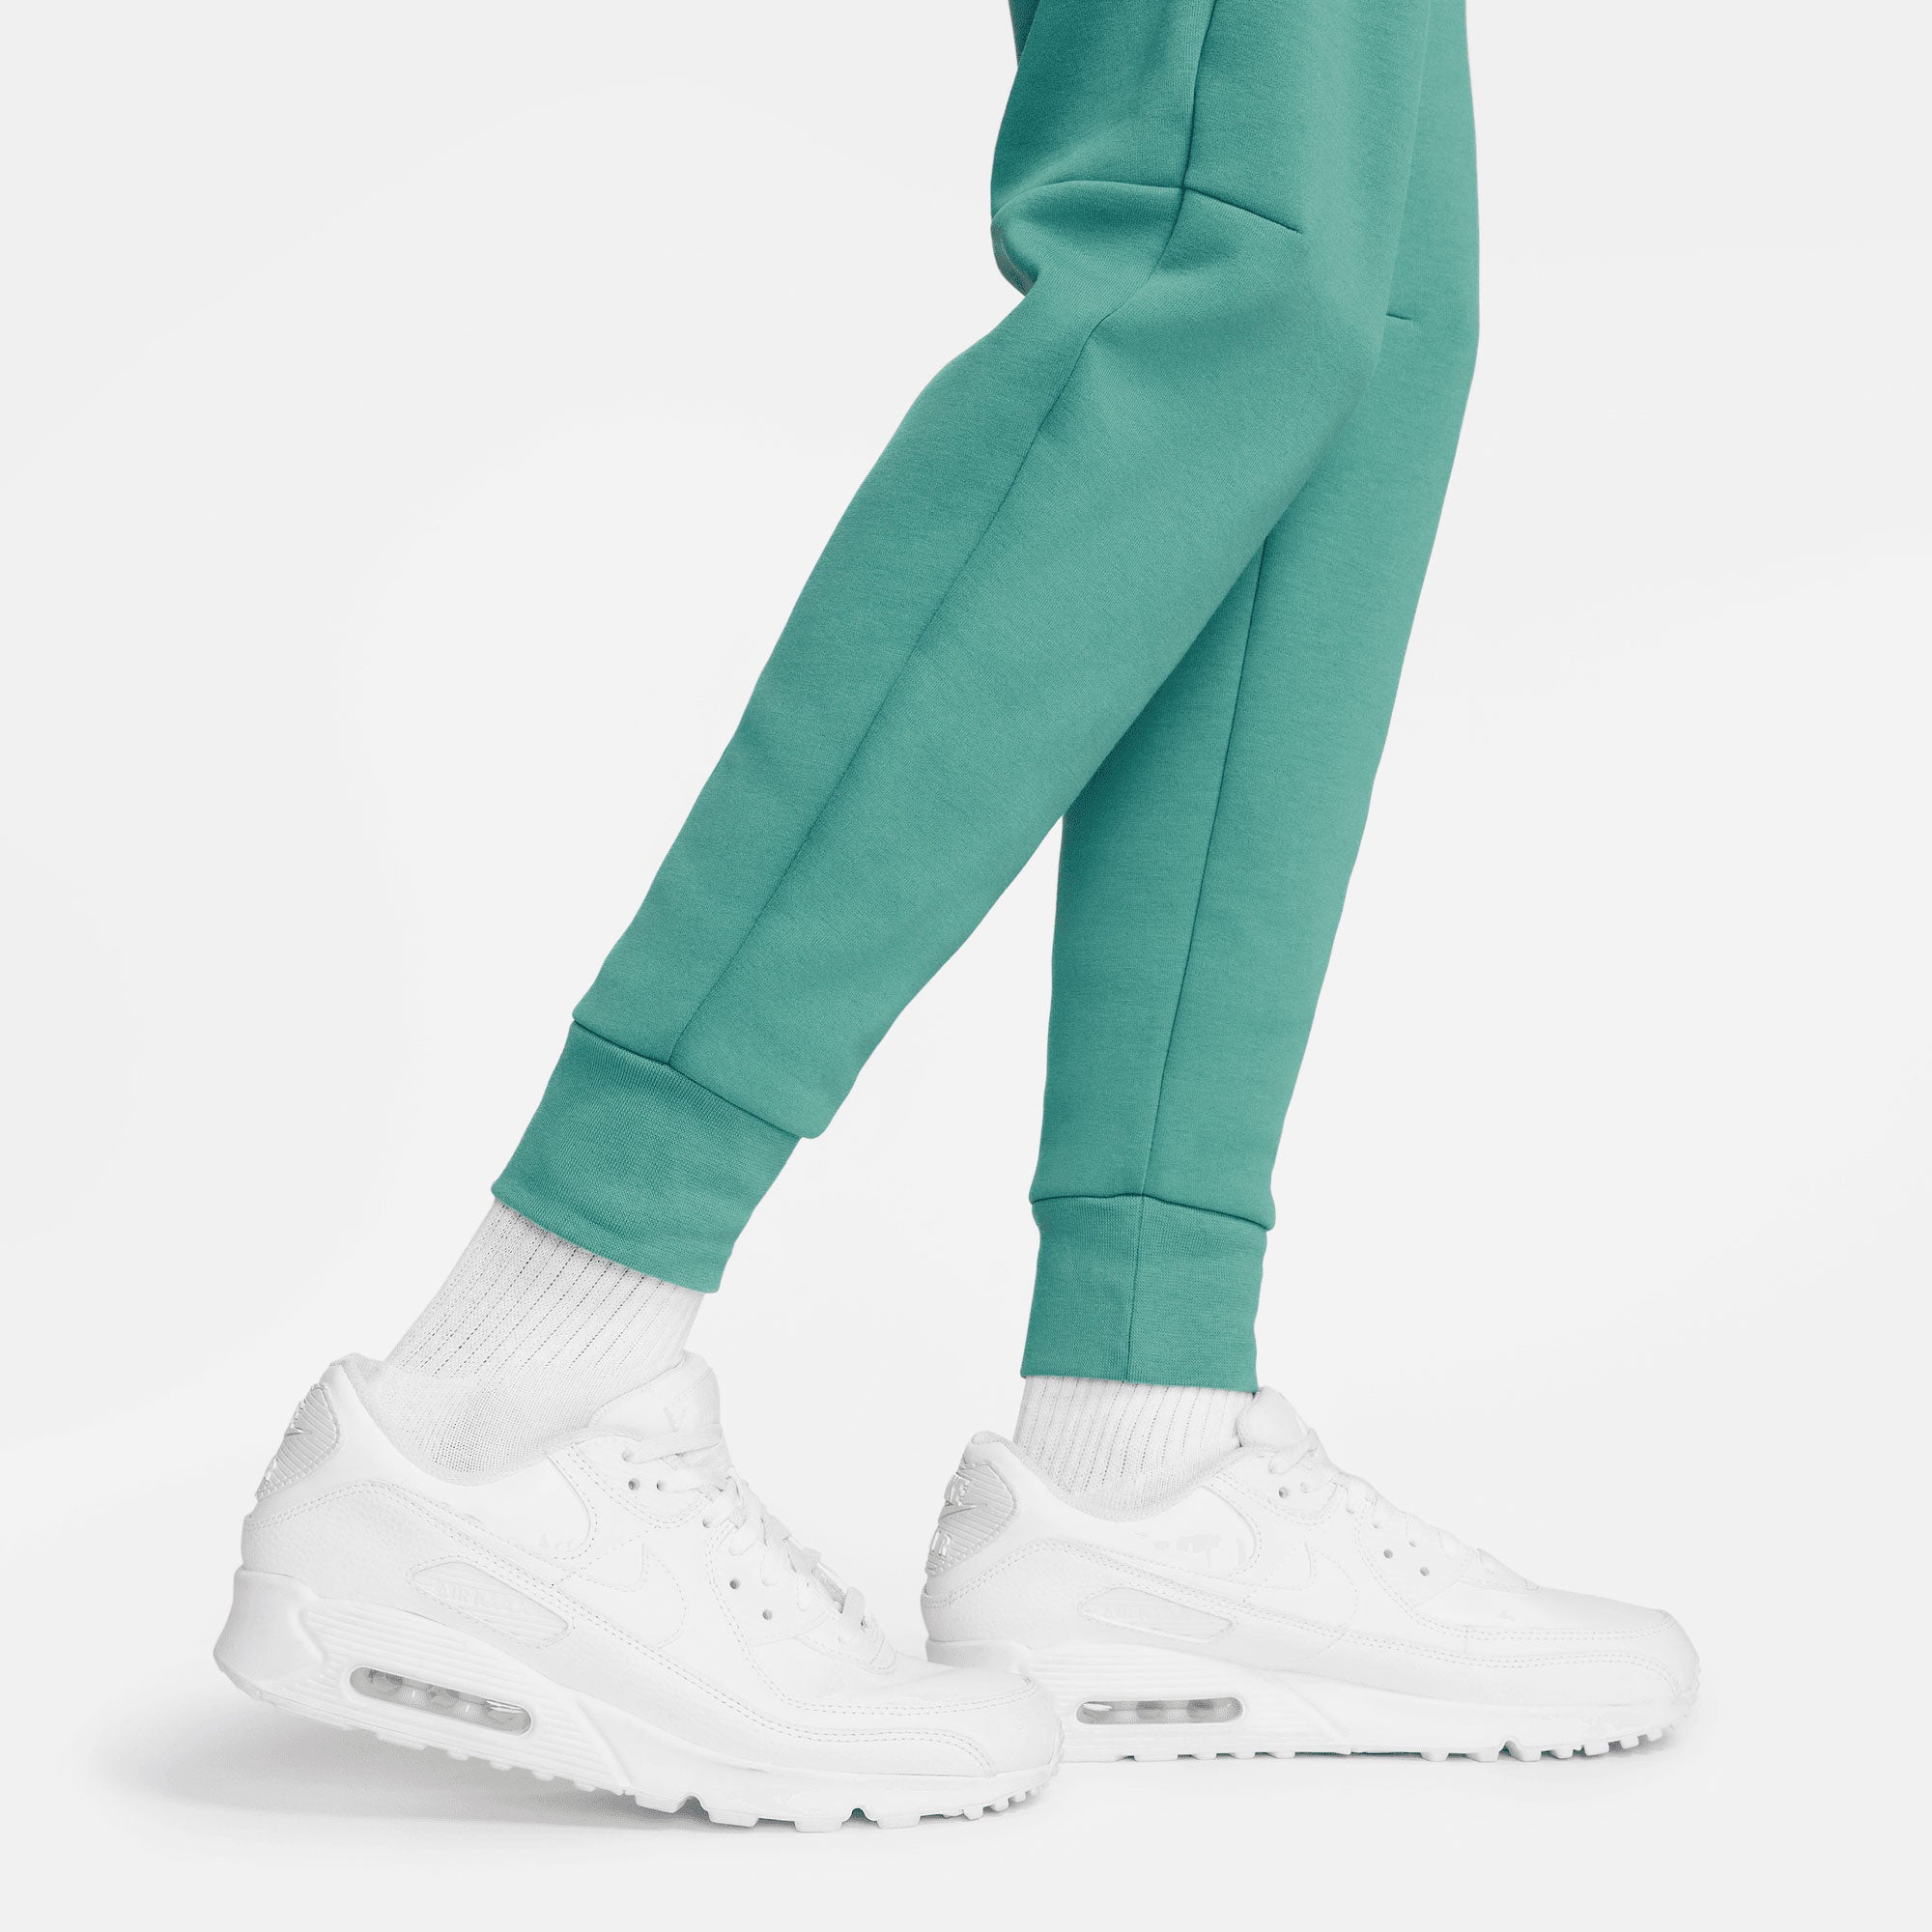 Nike Tech Fleece Men's Pants Green (5)